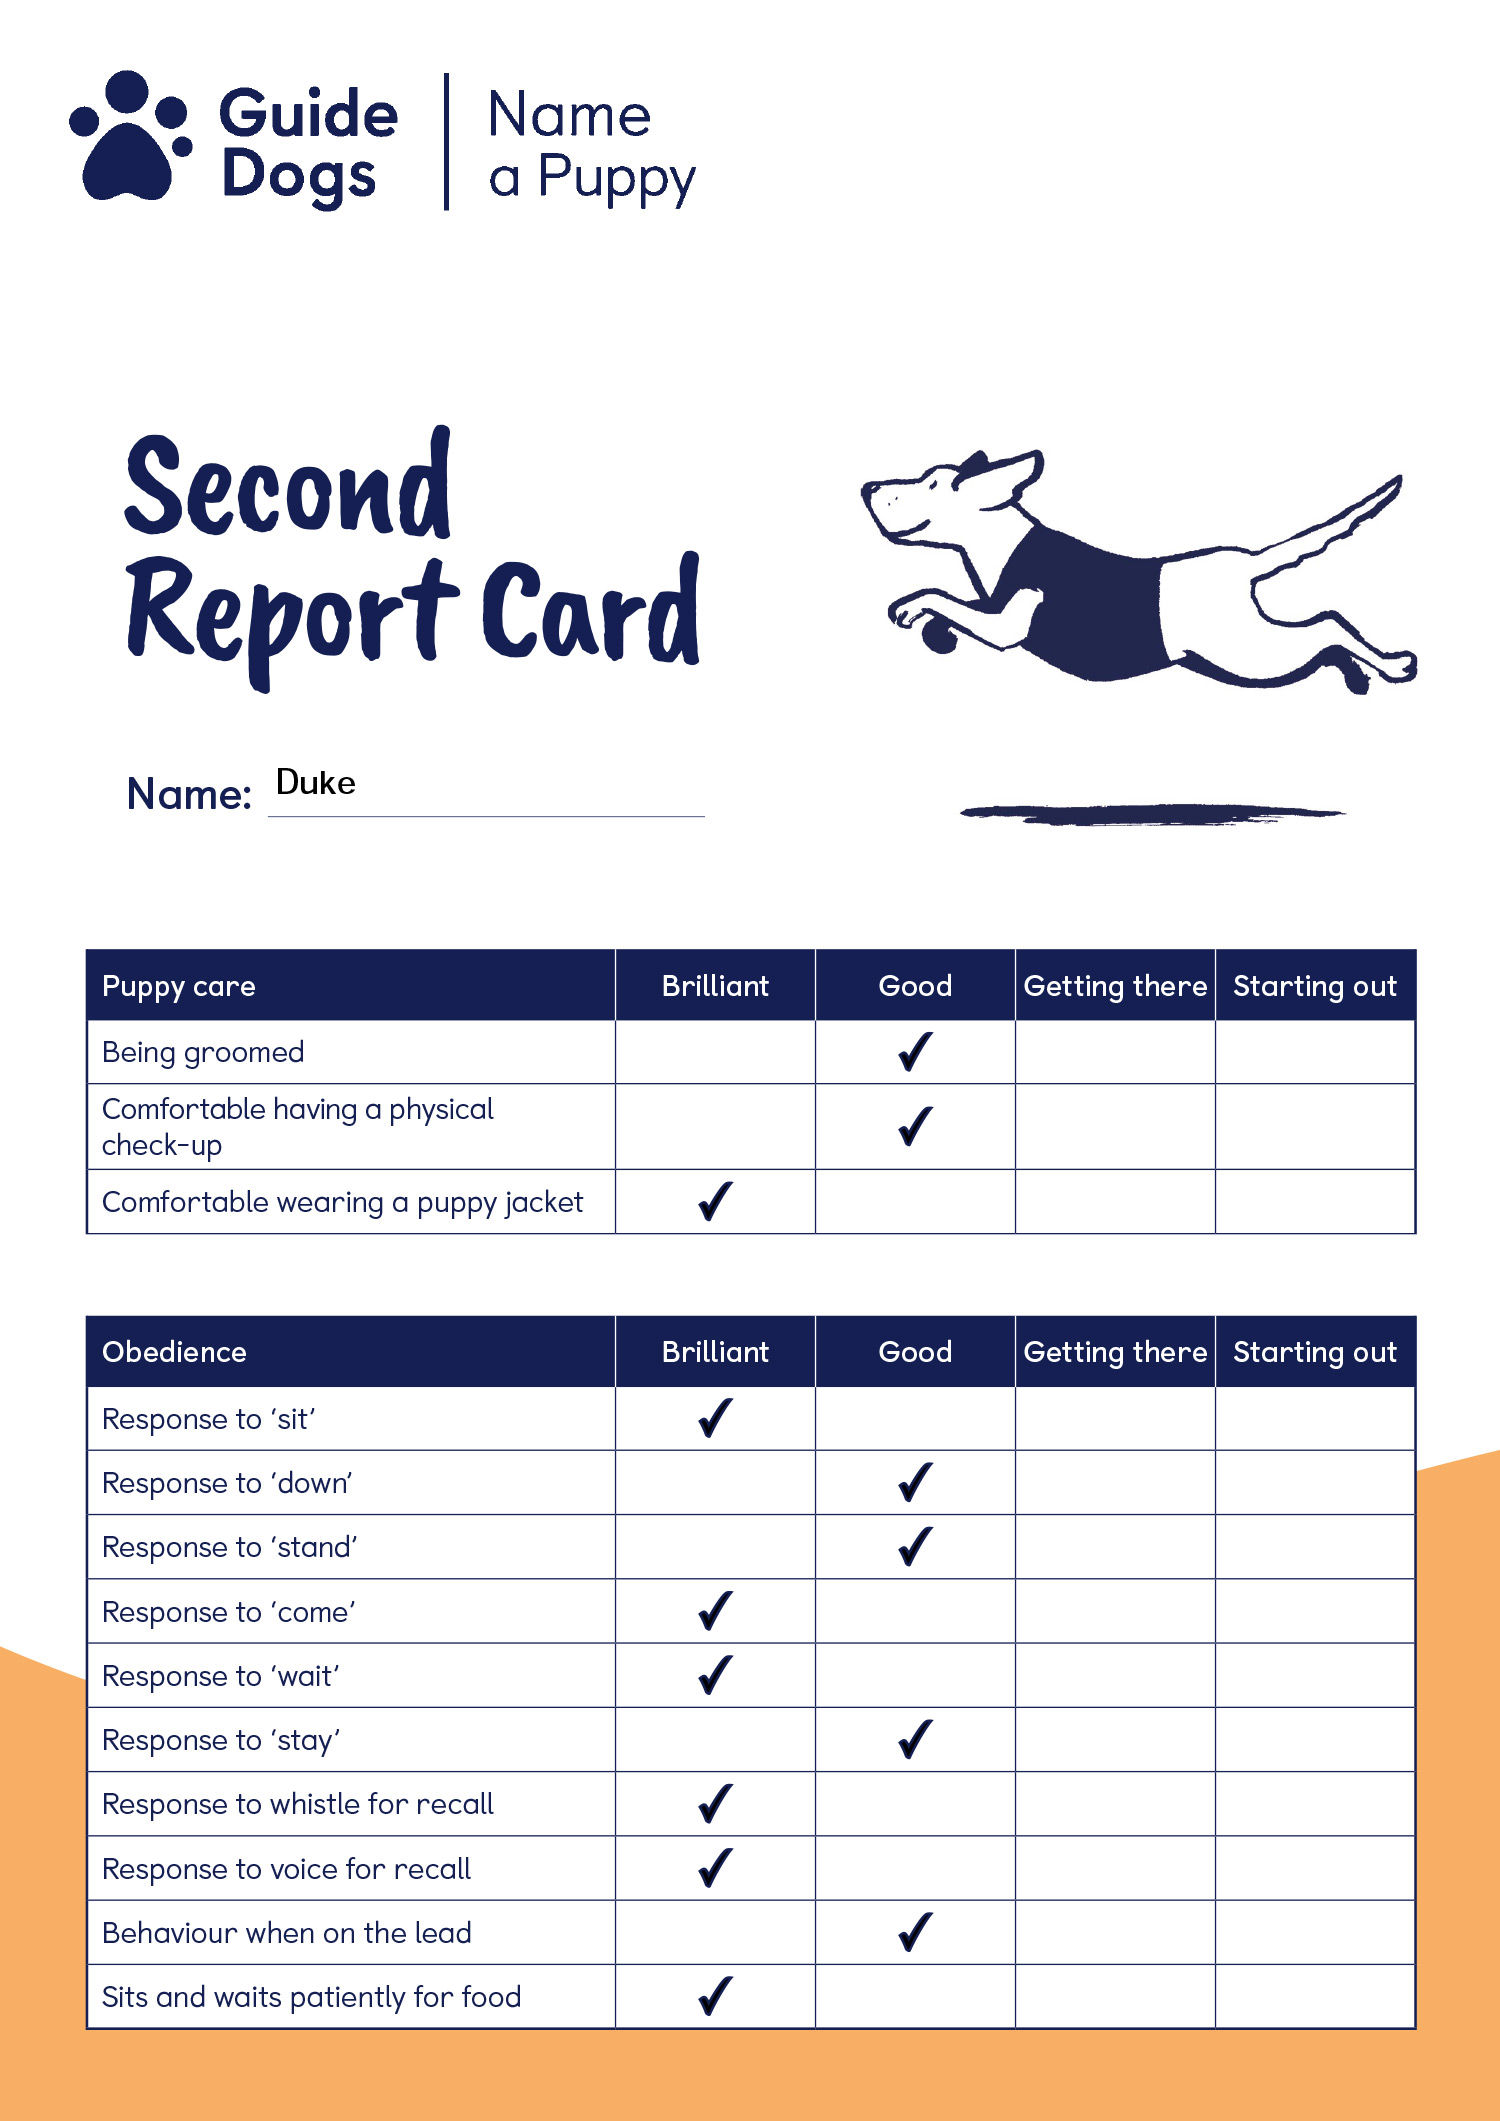 Duke Report Card 01